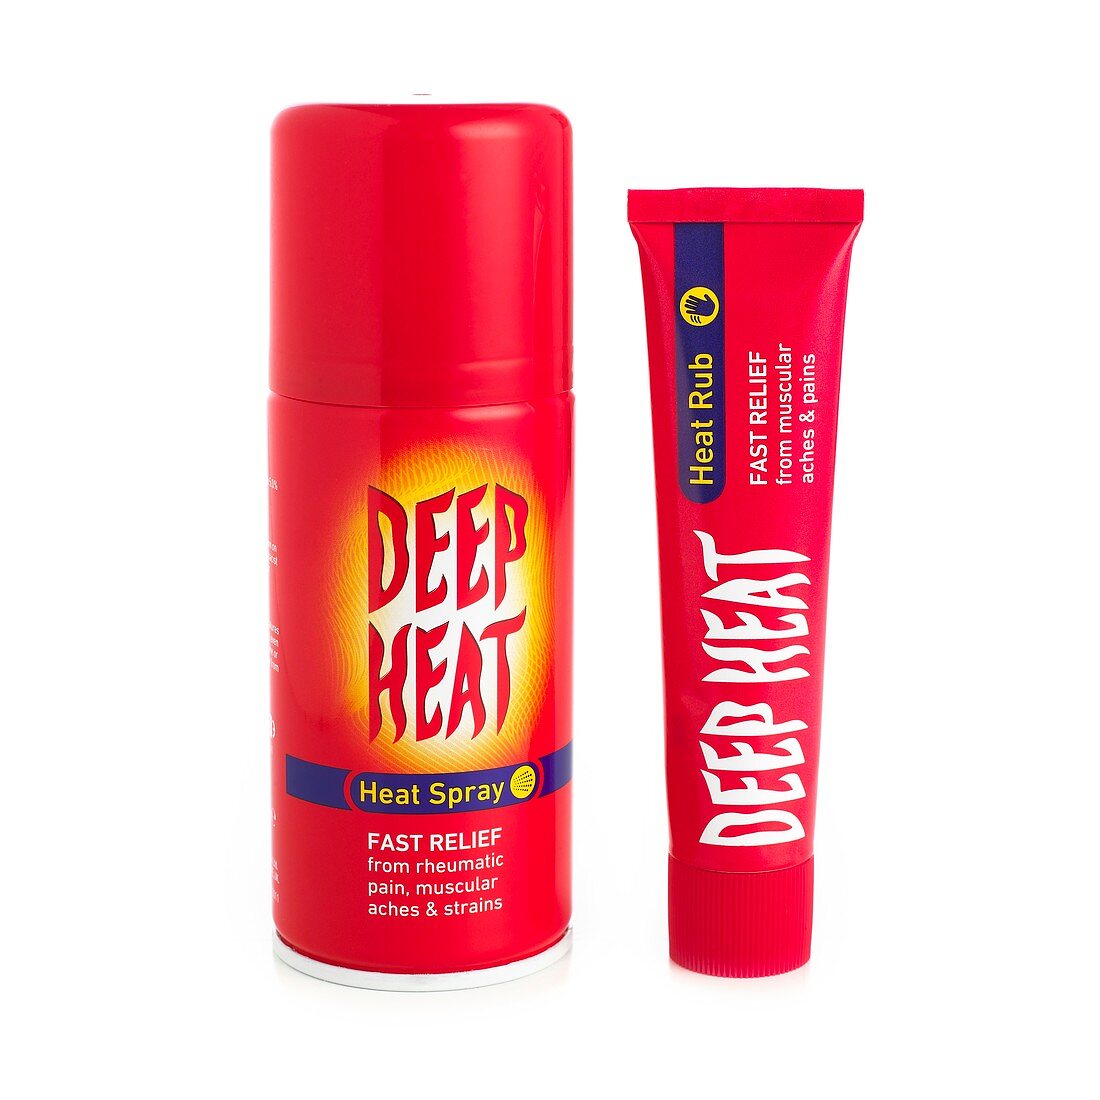 Deep Heat spray and lotion